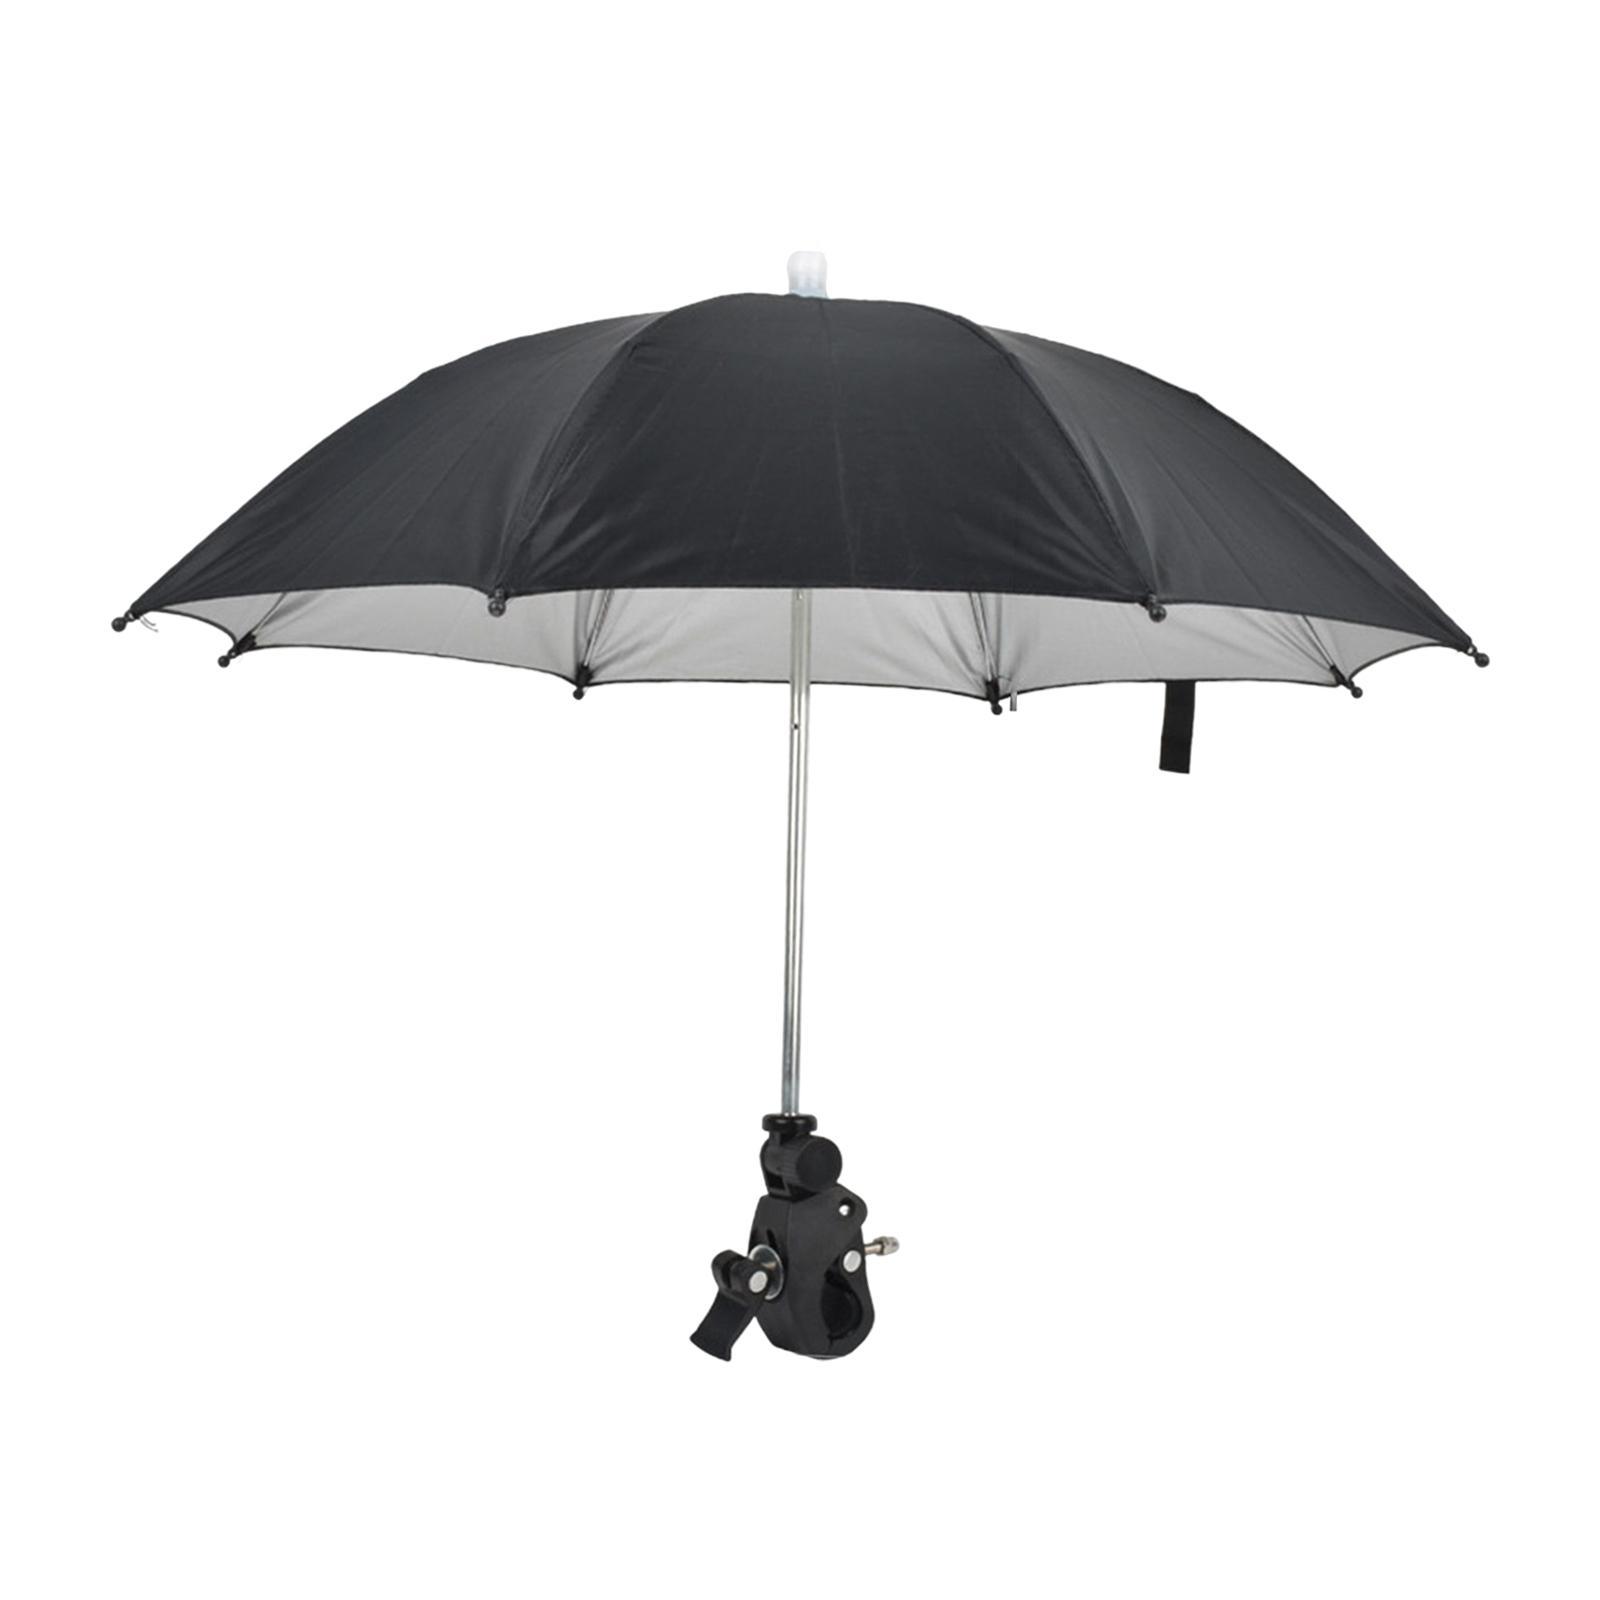 Camera Umbrella with Clip Durable Professional Accessory for Bike